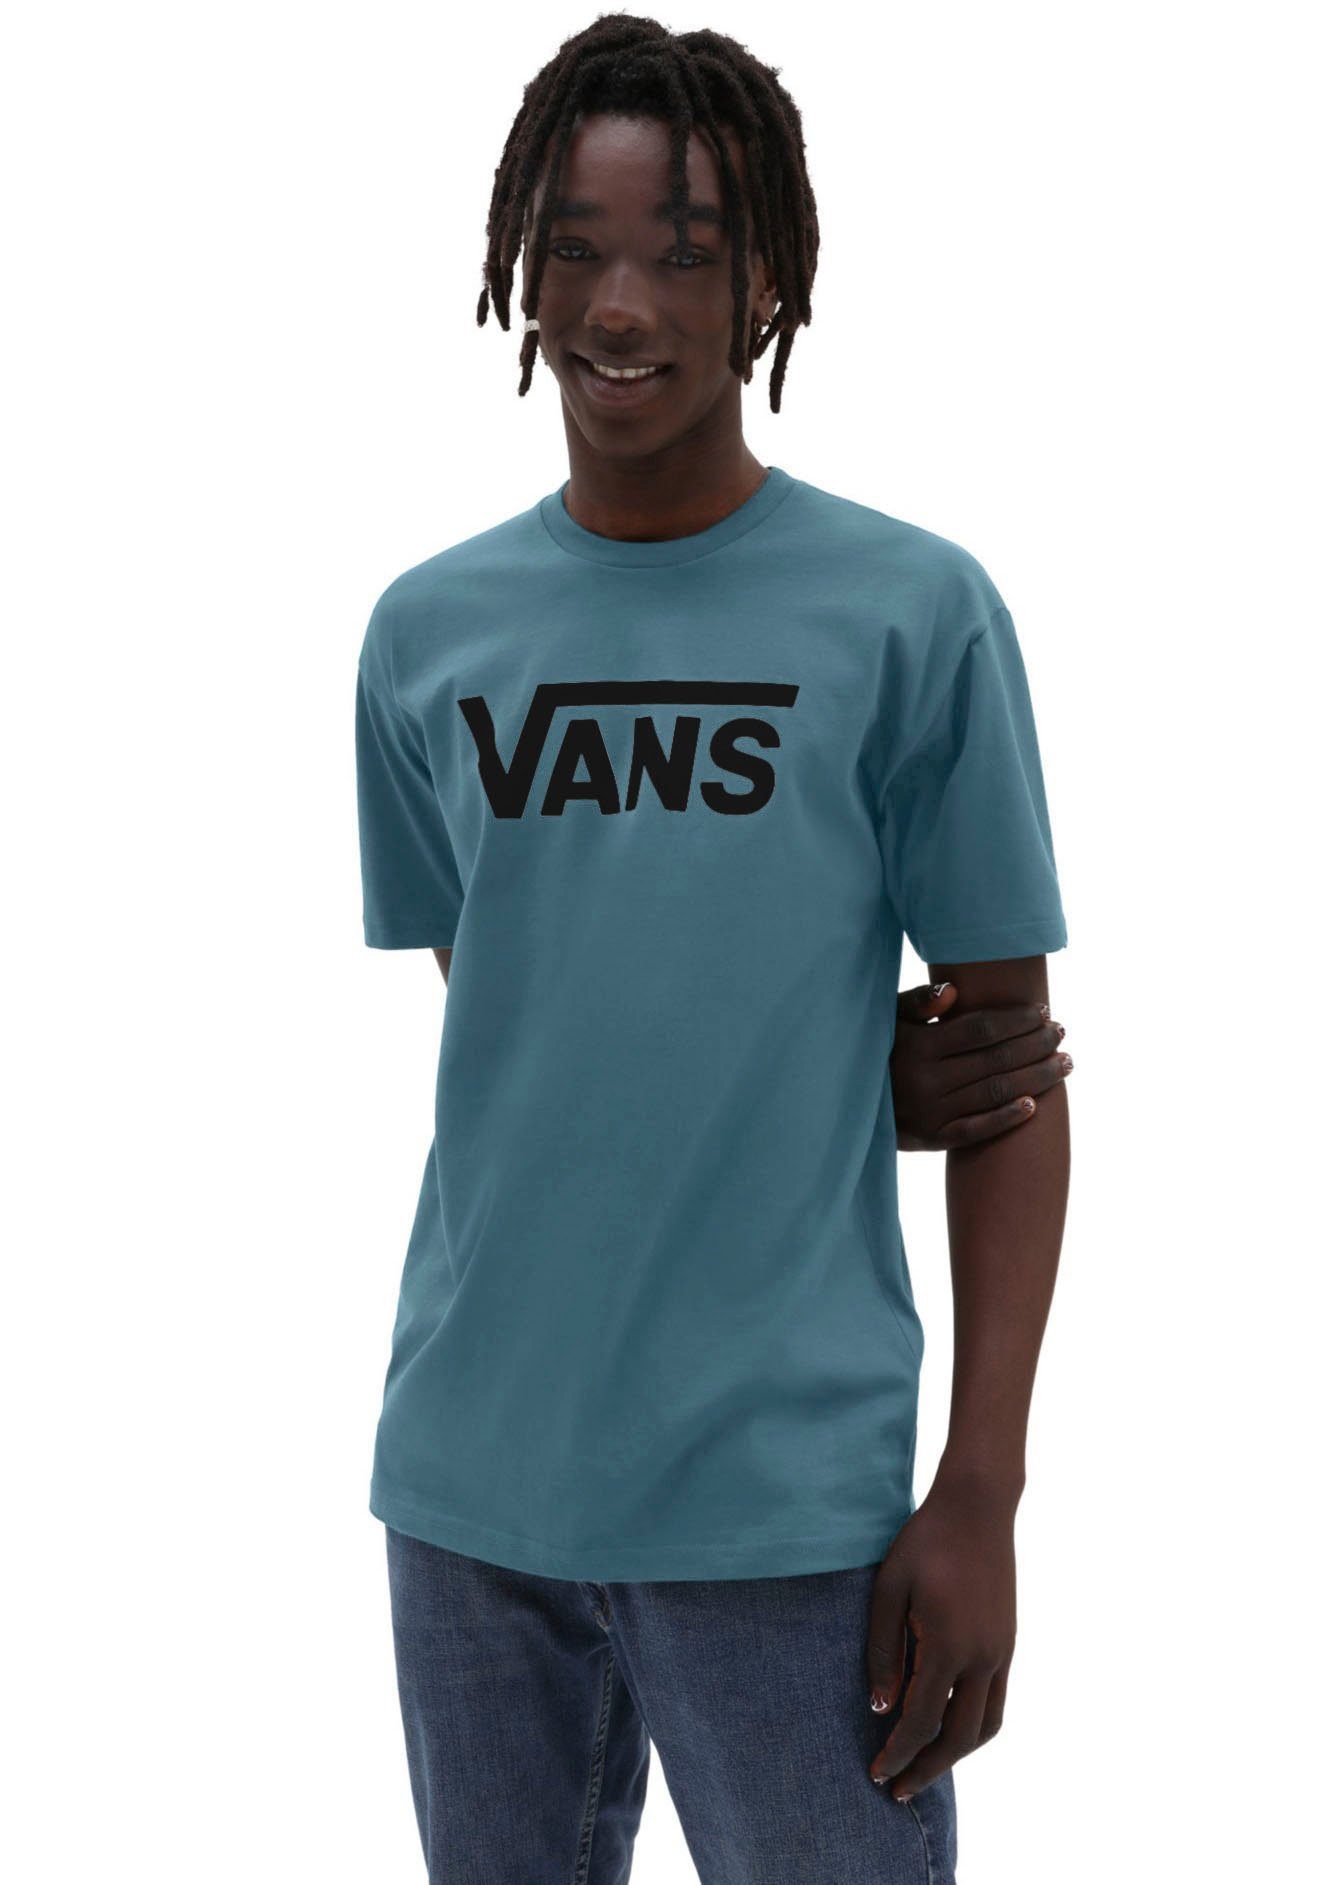 Vans T-Shirt MN VANS CLASSIC mit großem Logoprint blue mirage